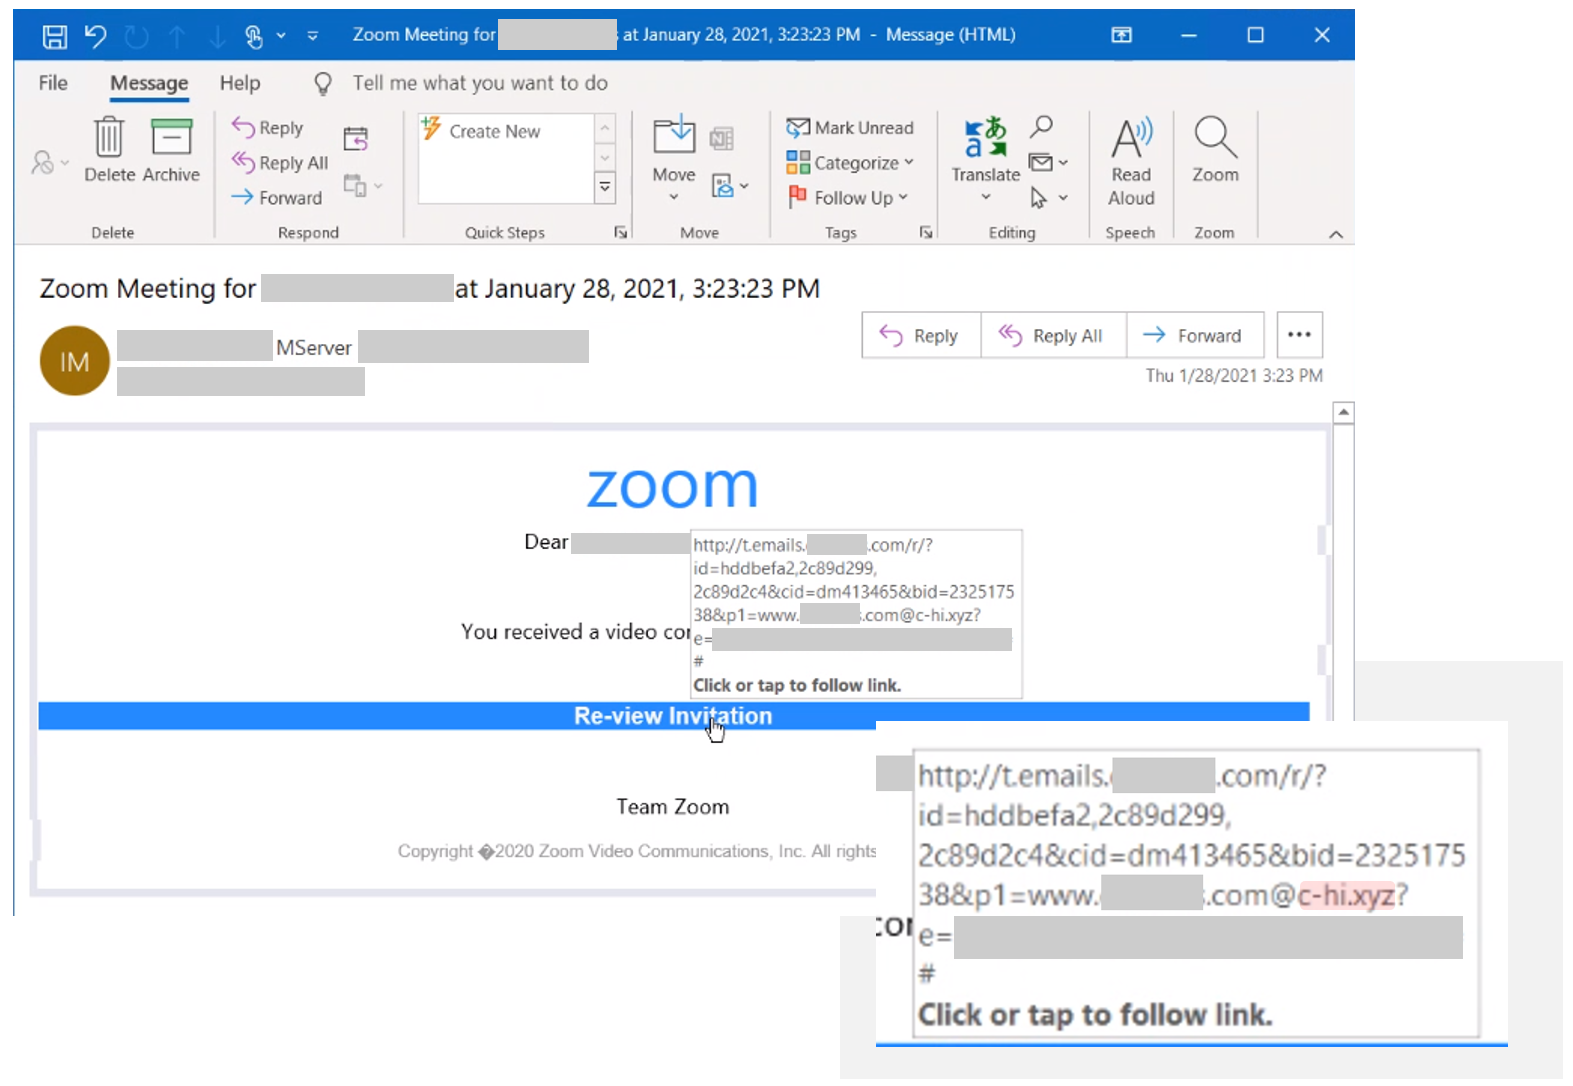 Fresh Spear-Phishing Email Spoofs Microsoft Domain